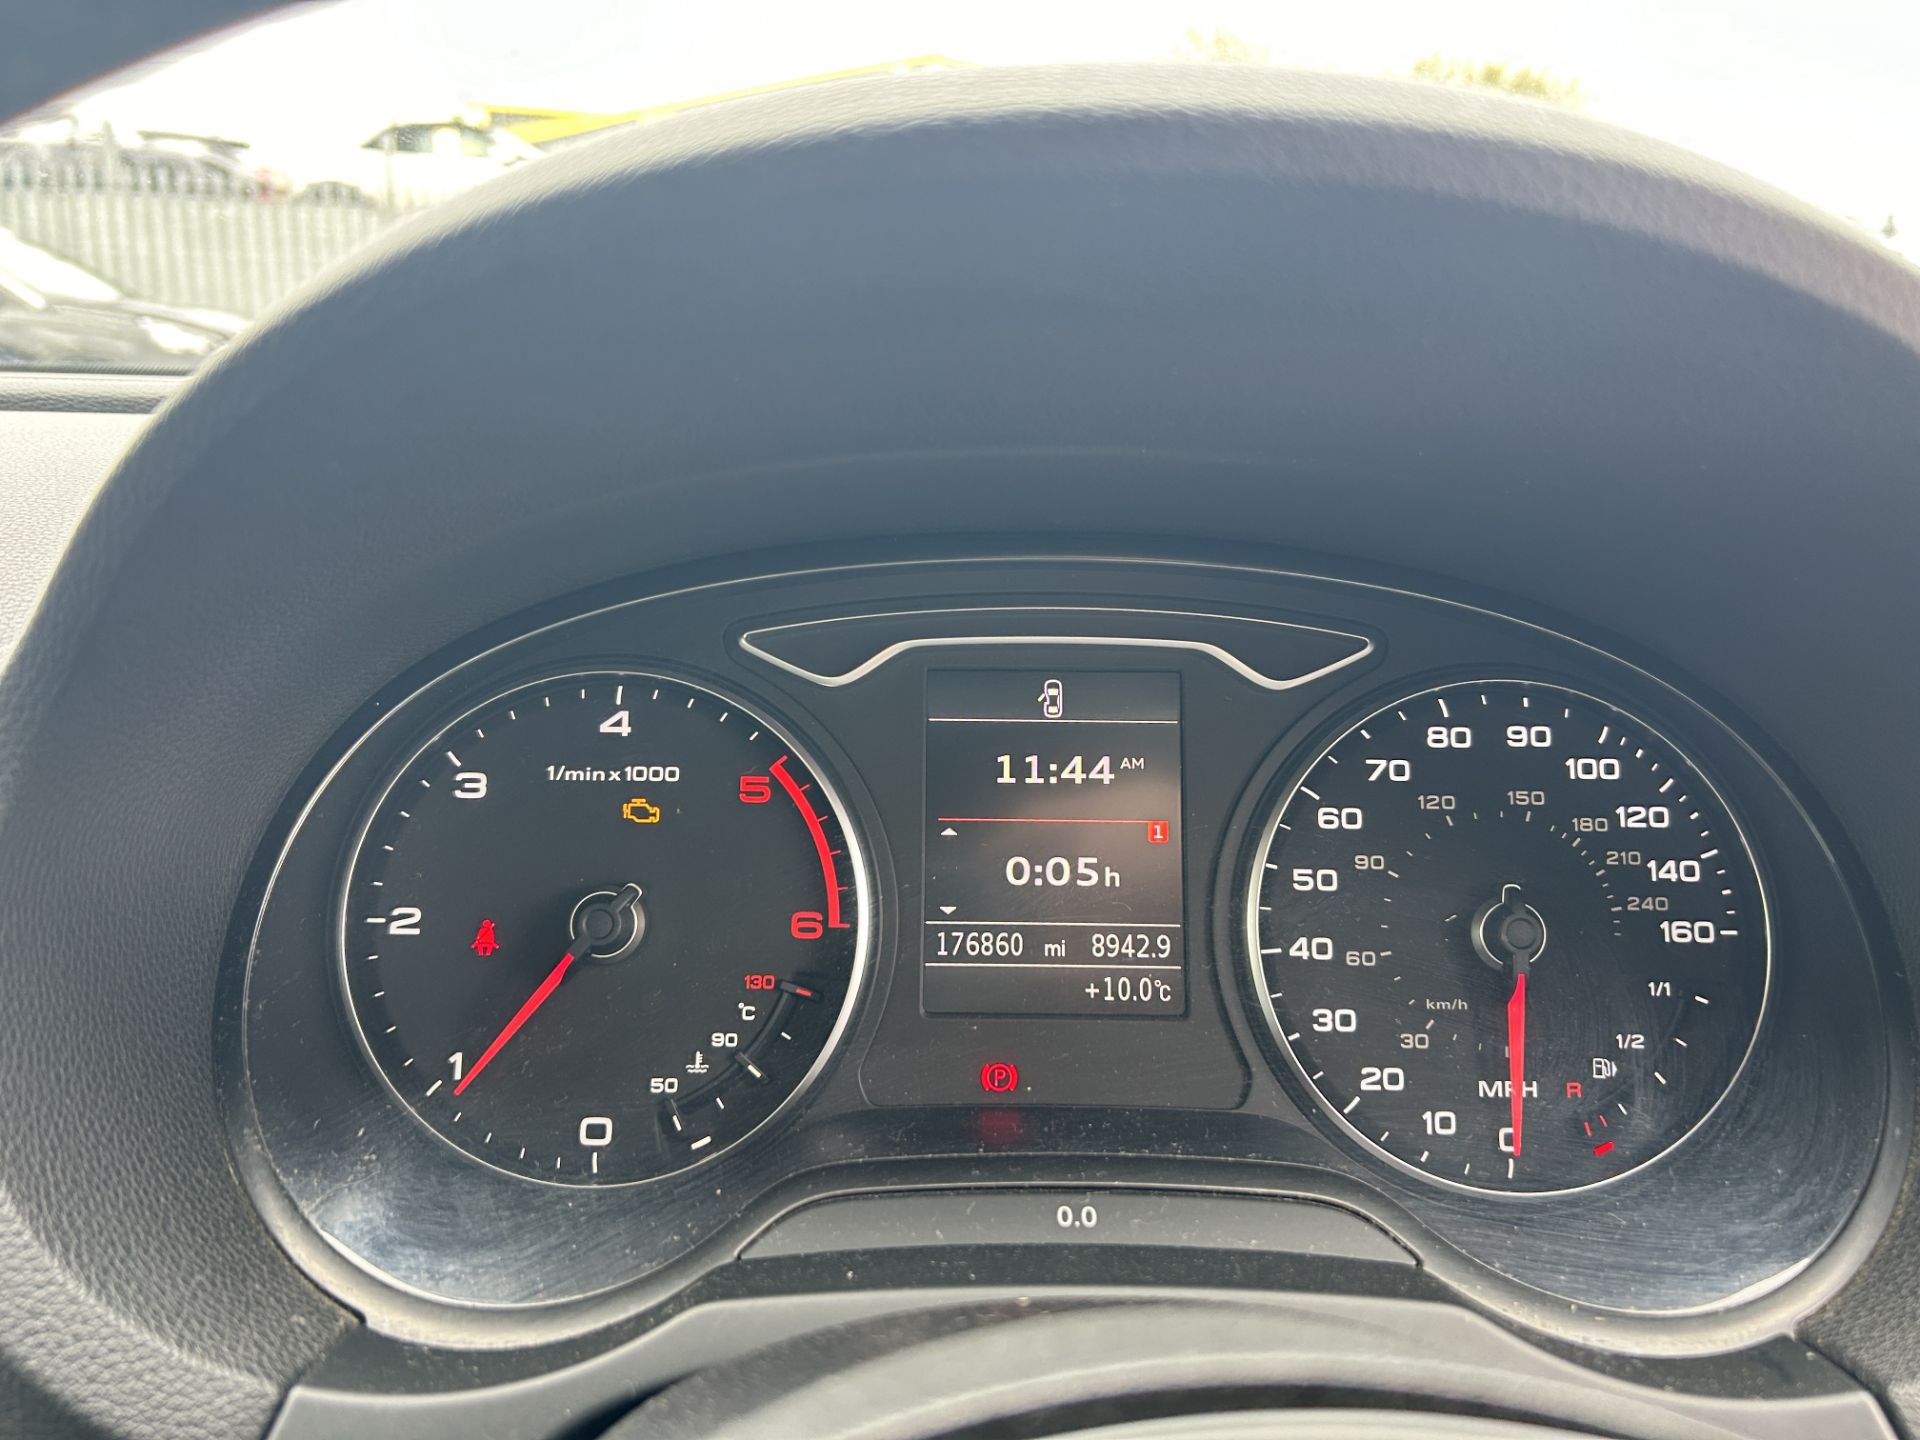 Audi A3 Sport TDI Diesel 5 Door Hatchback | YK14 CLZ | 178,860 Miles - Image 14 of 14